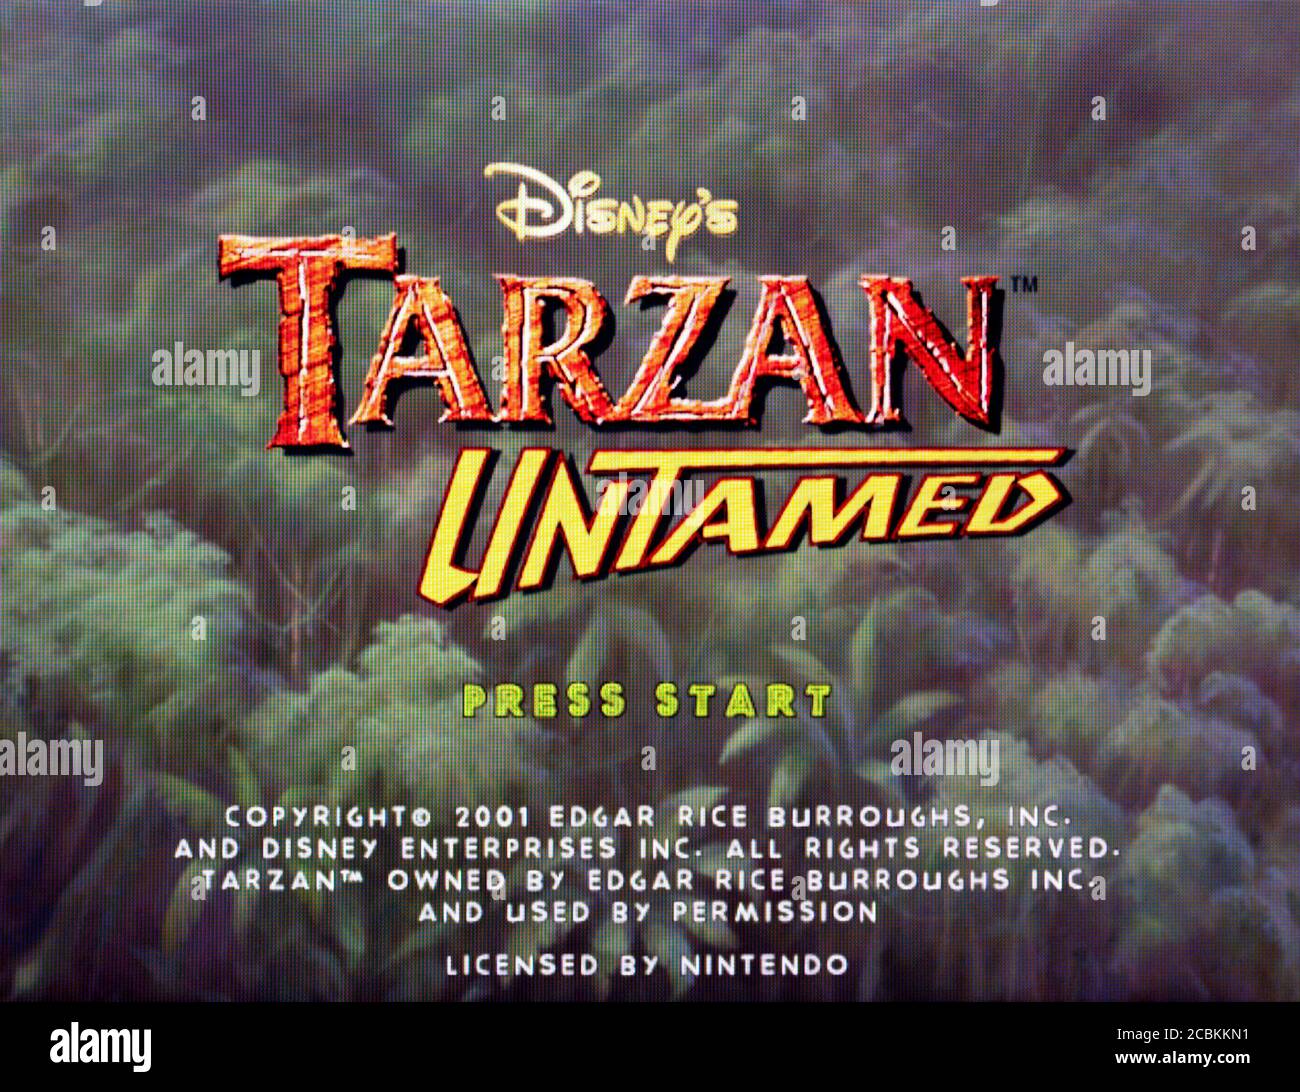 Disney's Tarzan Untamed - Nintendo Gamecube Videogame - uso editorial solo Foto de stock